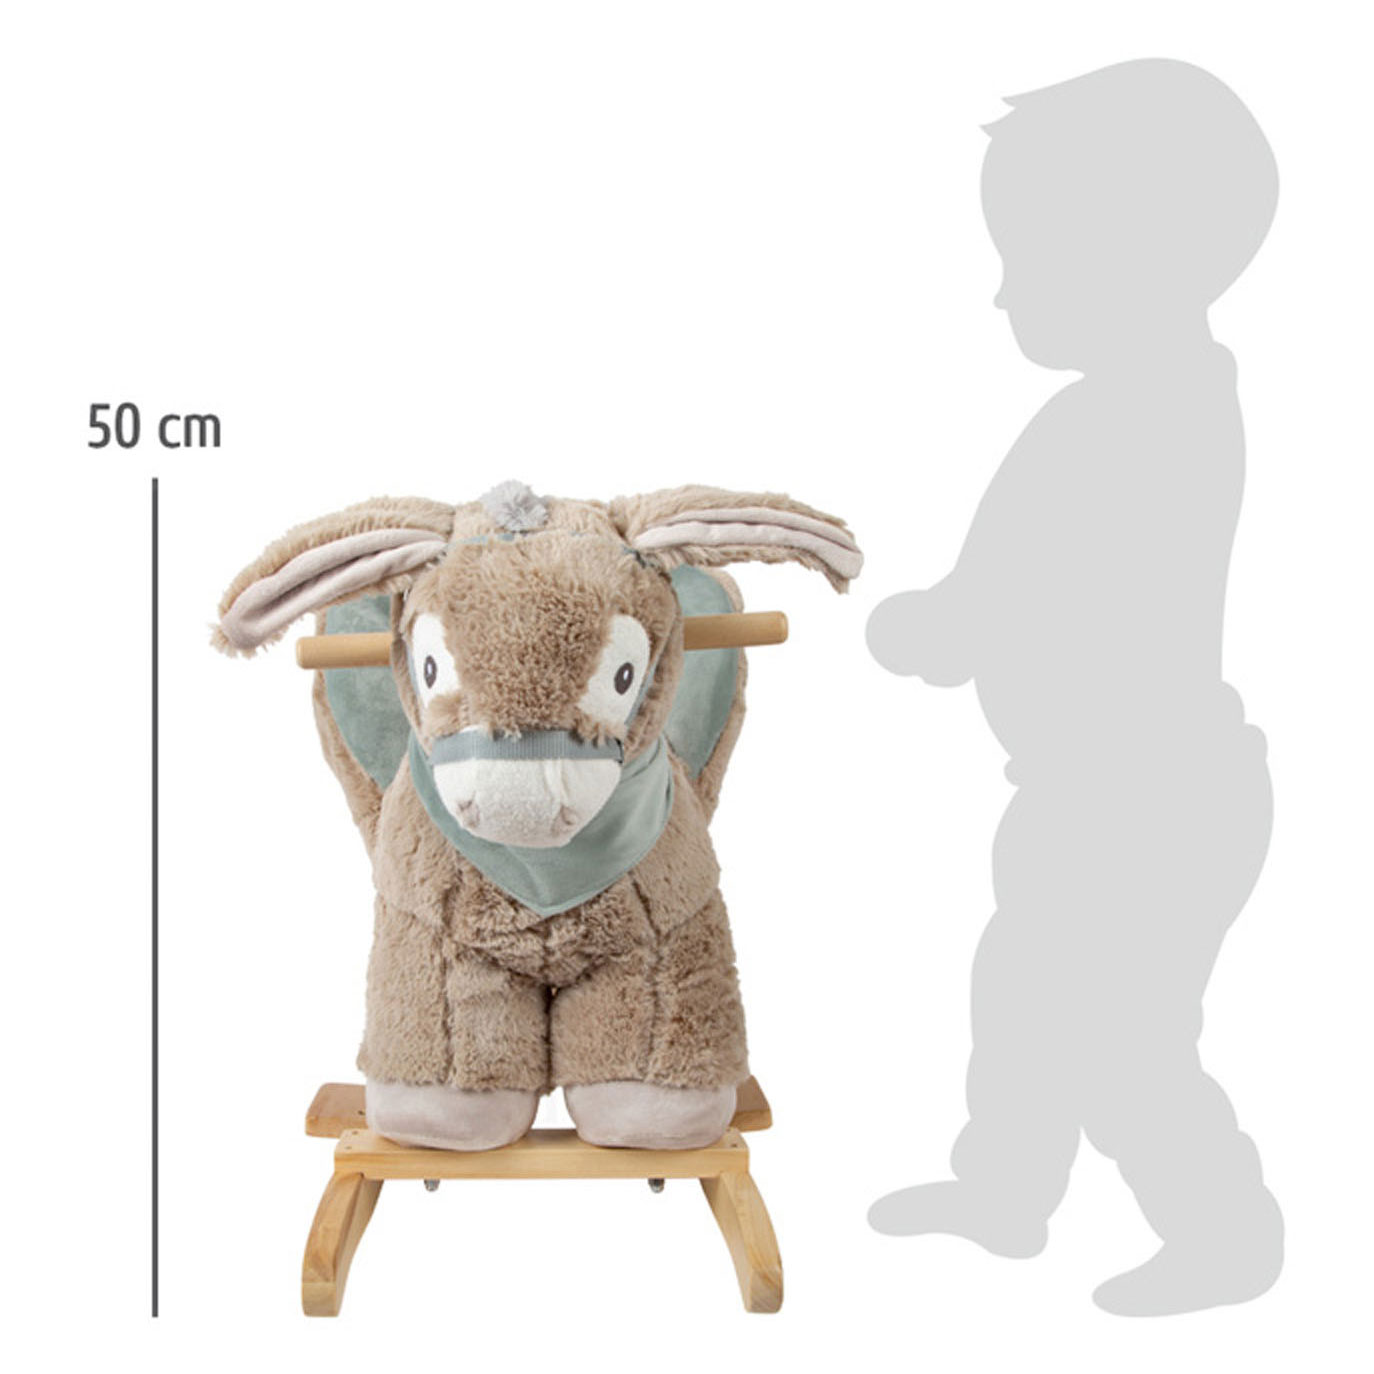 Small Foot - Bump-Esel aus Holz mit Stuhl